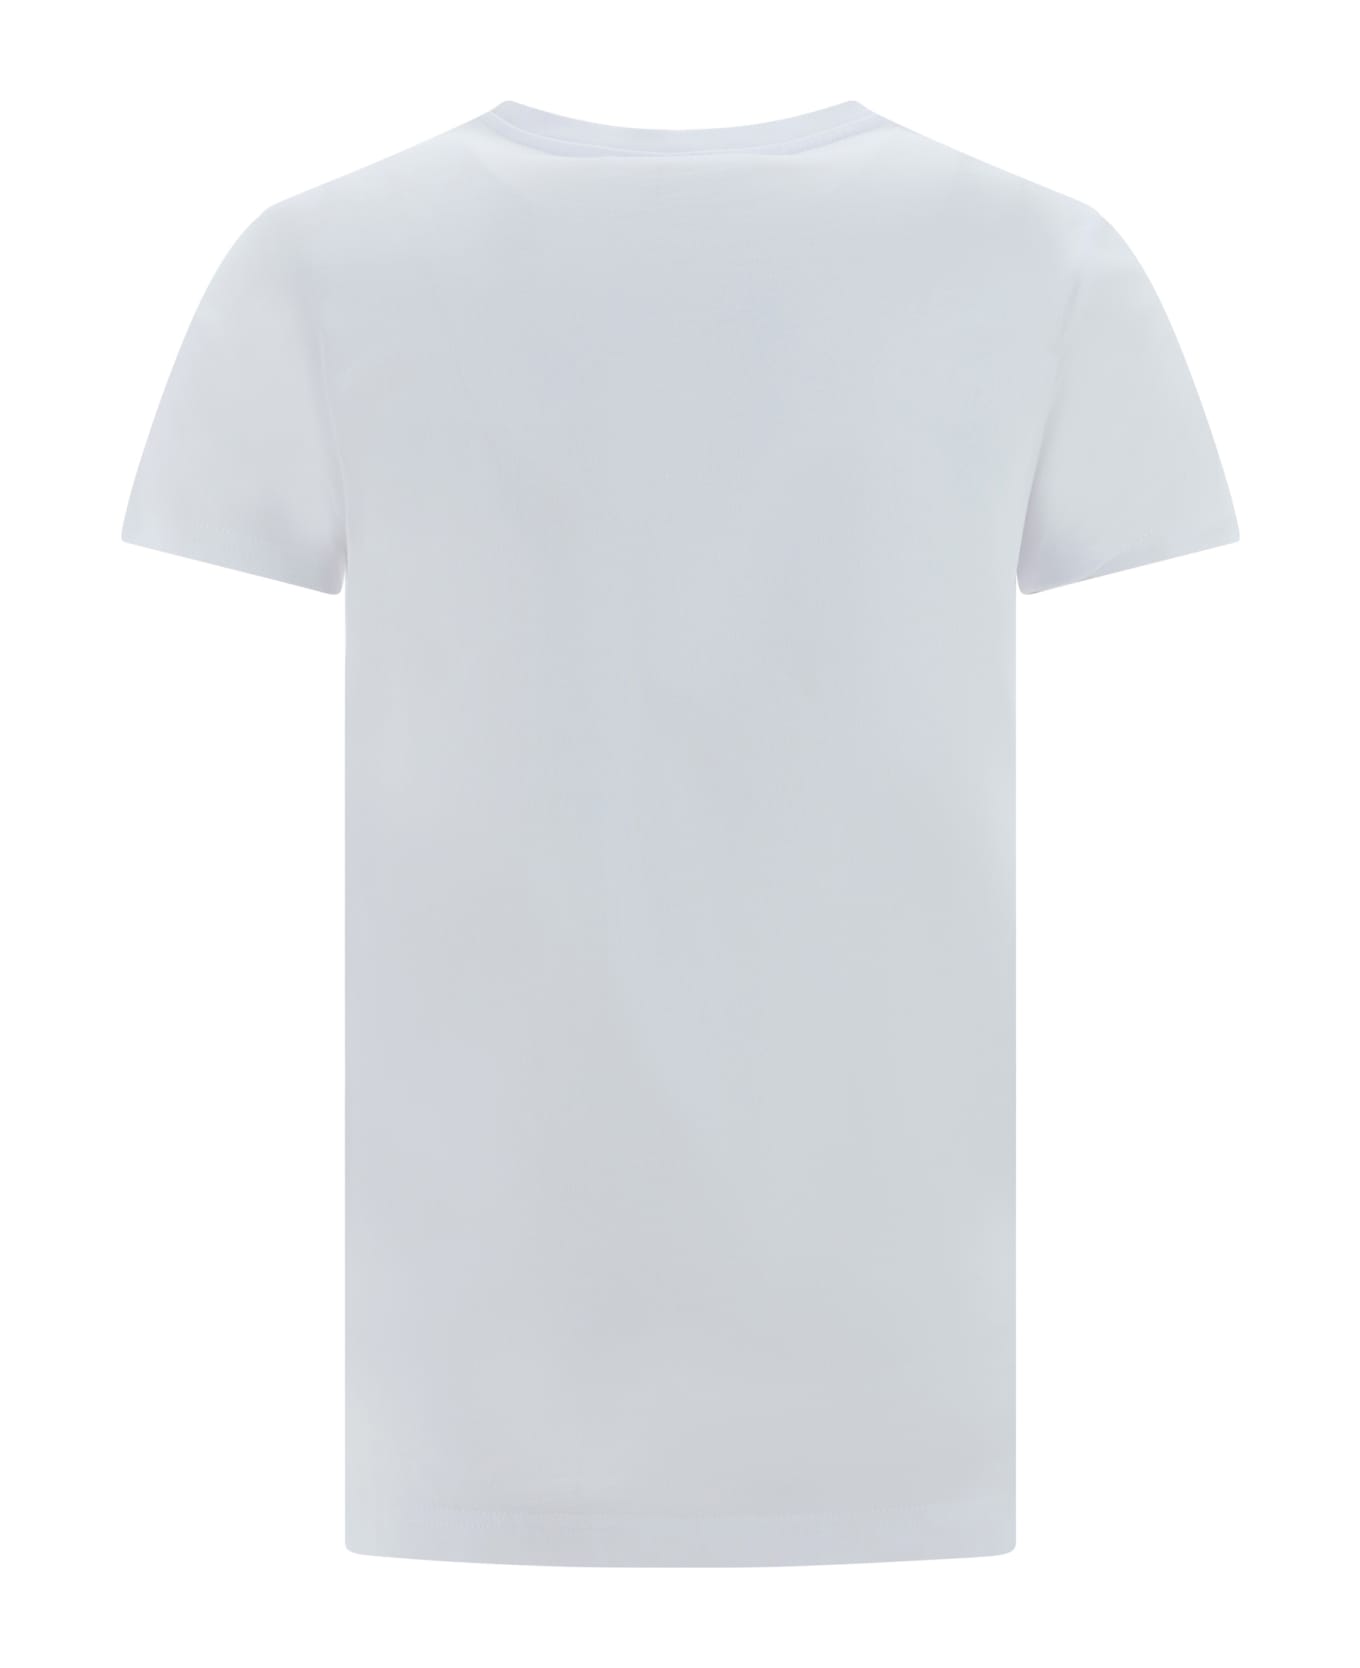 Vivienne Westwood T-shirt - White Tシャツ